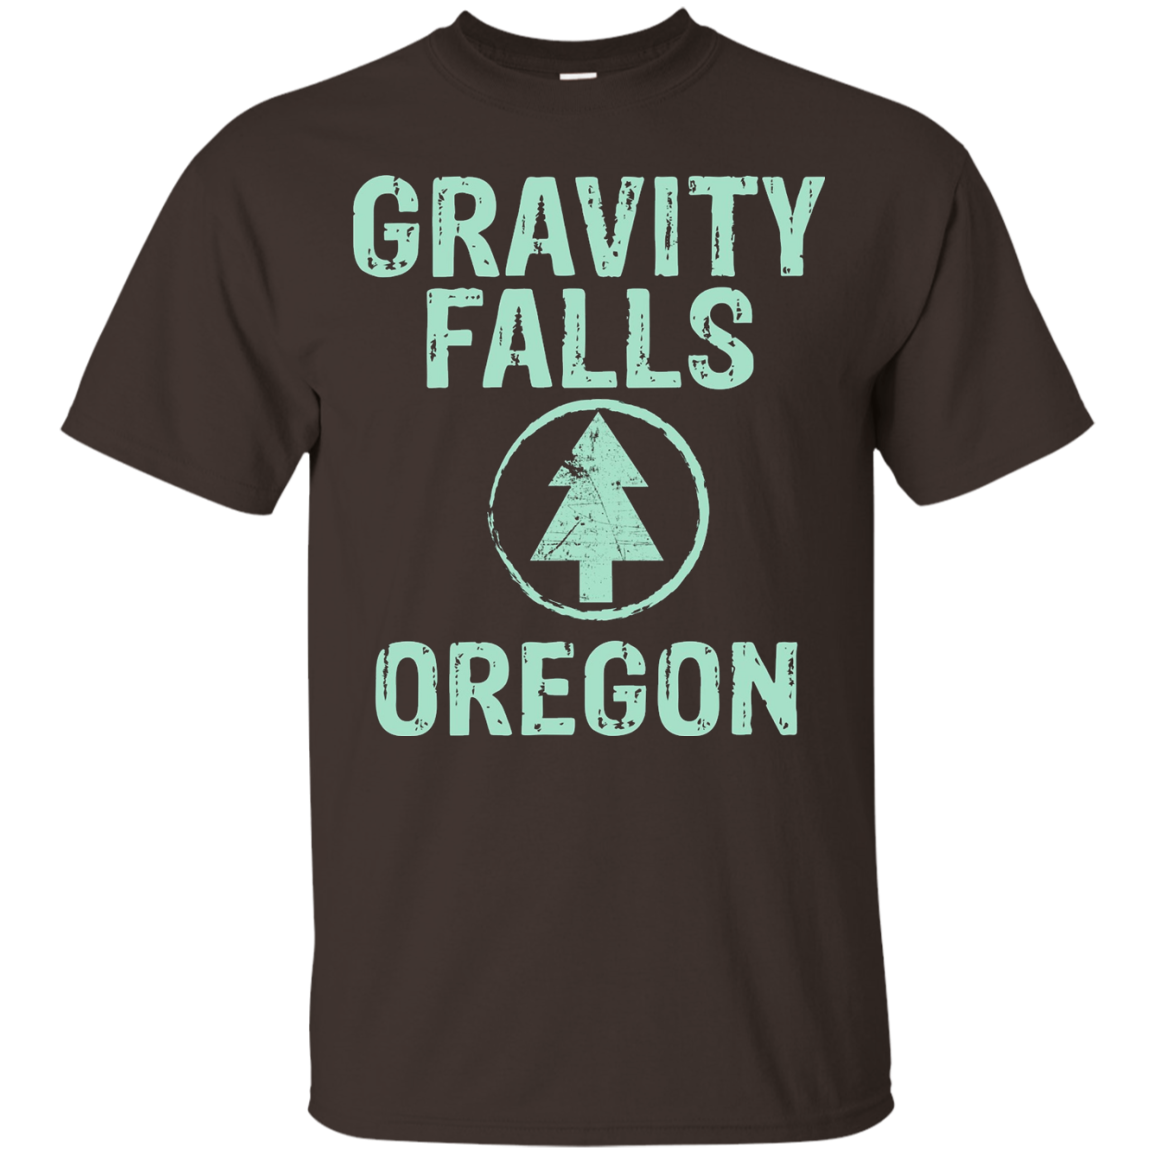 Gravity Falls TShirt Oregon Pine Shirt Shirt Design Online